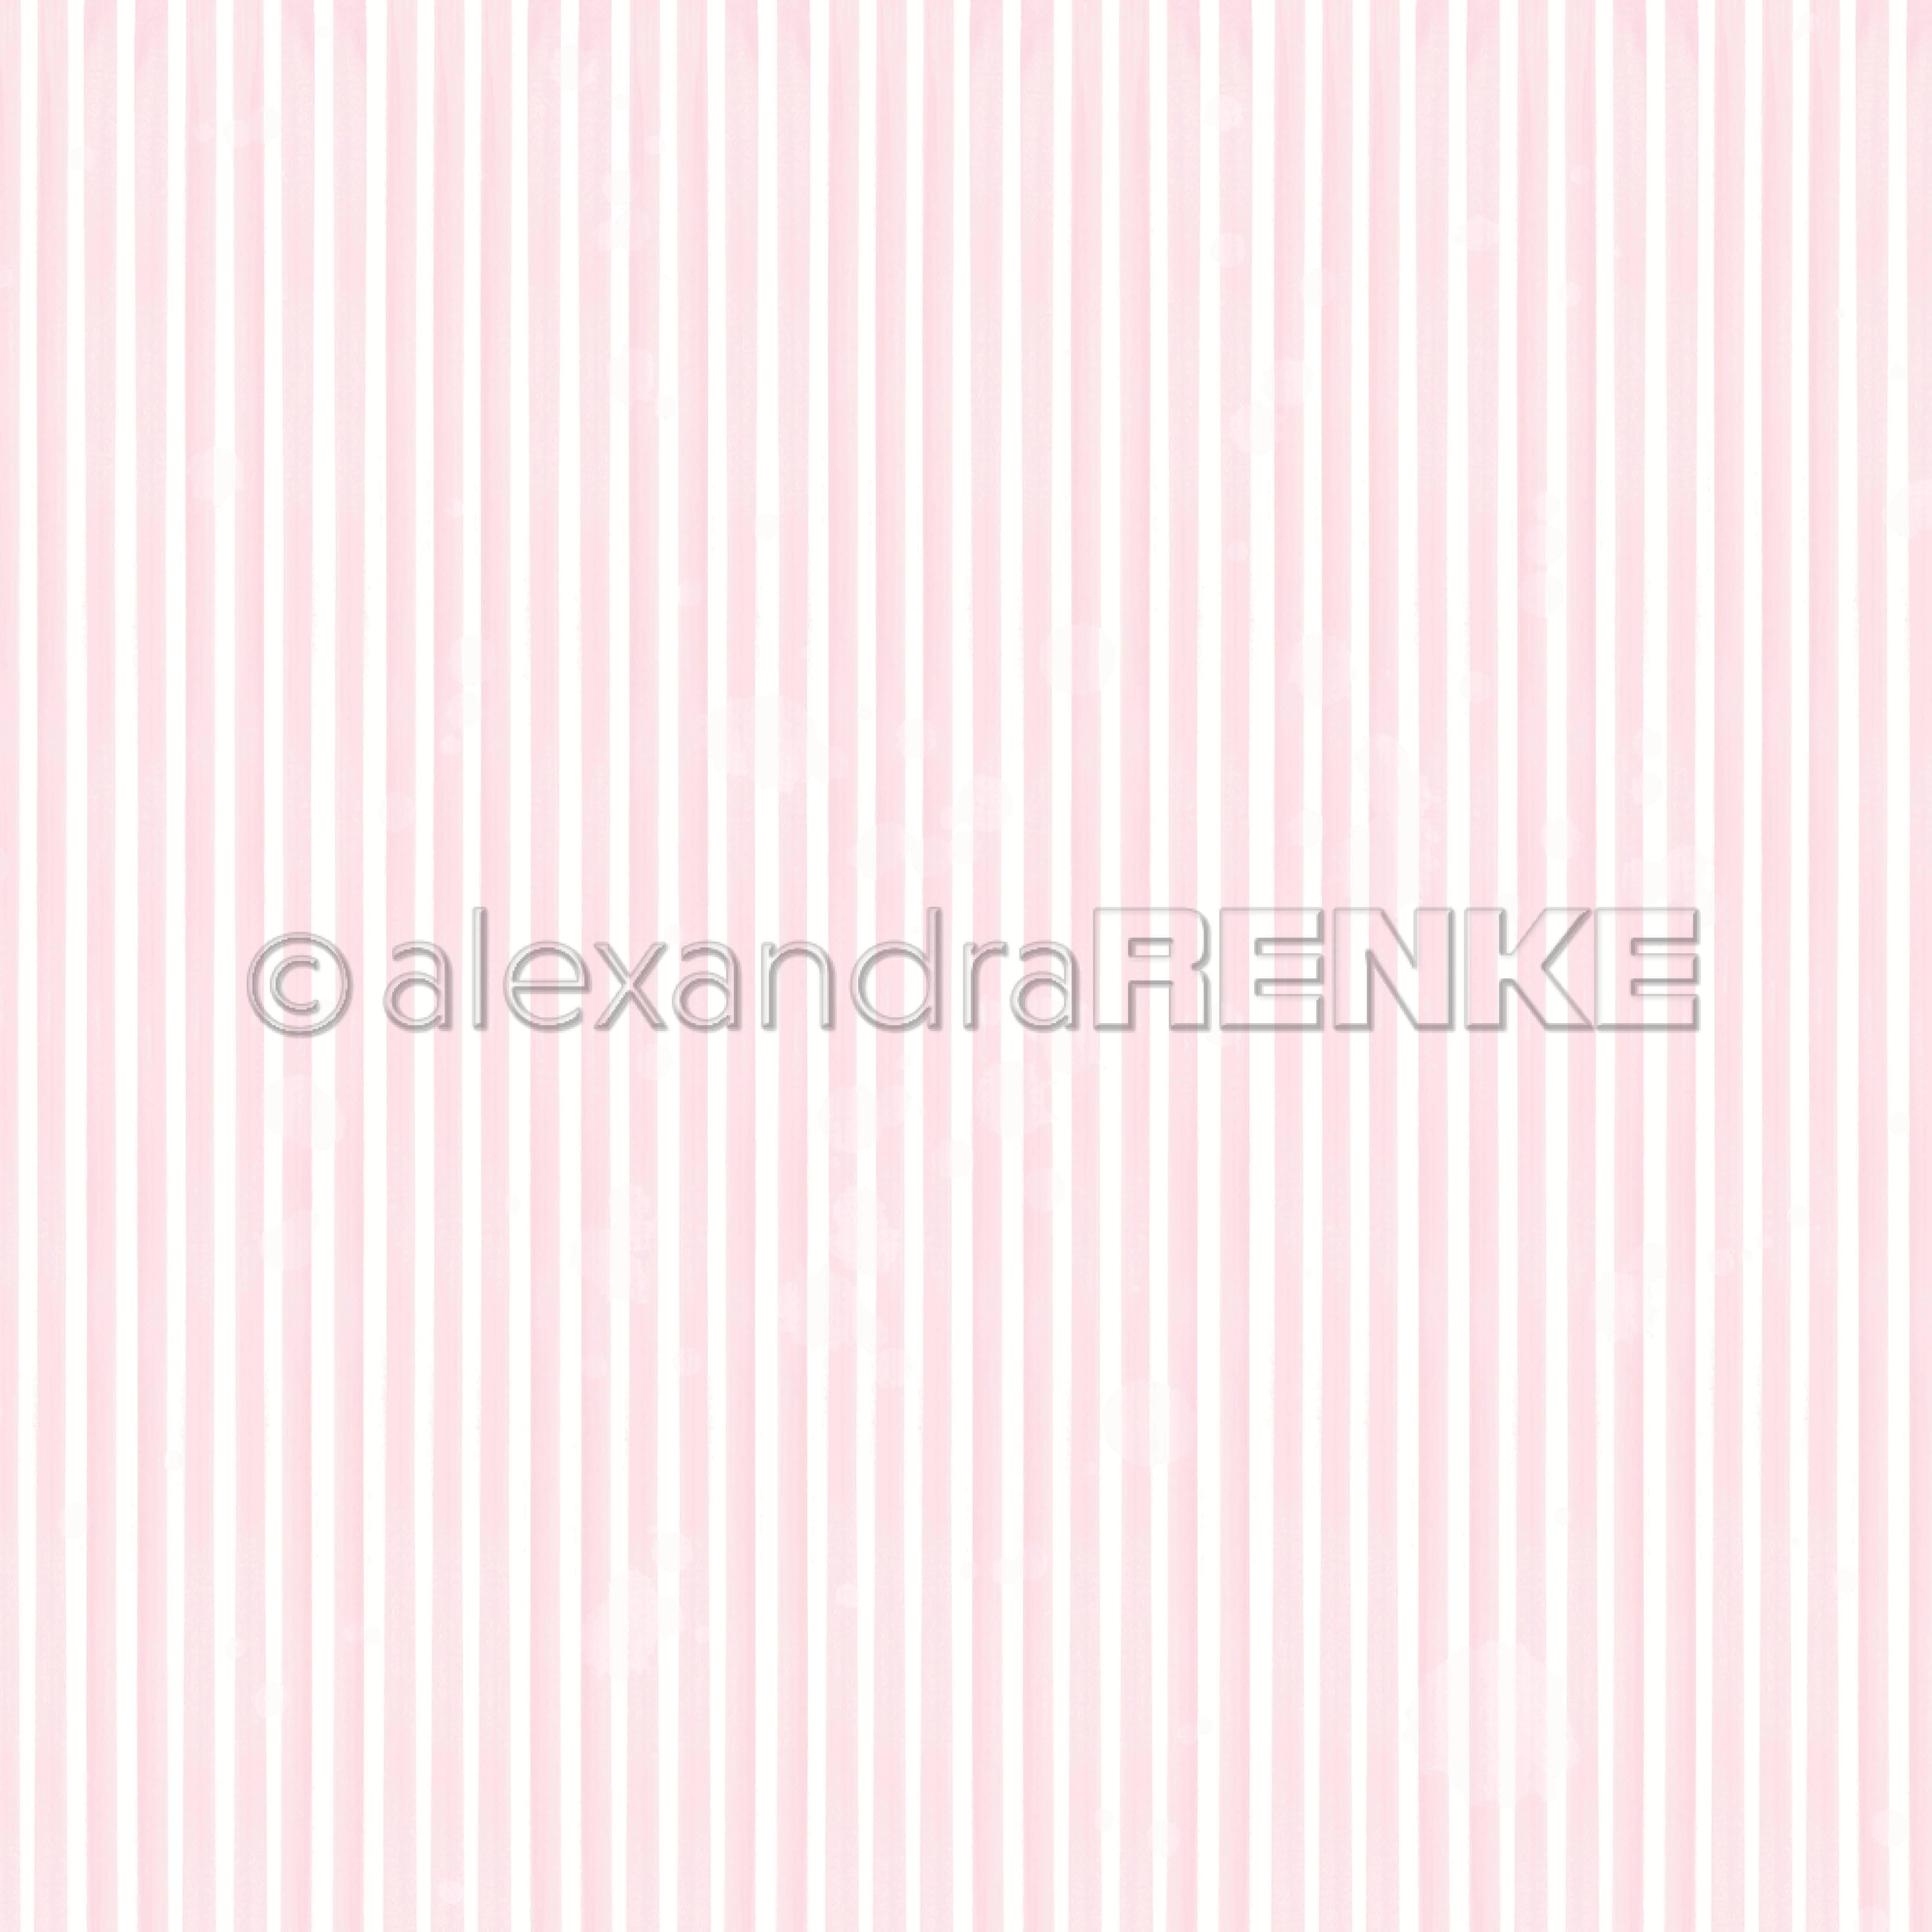 Alexandra Renke - Narrow stripes sakura pink  - 12 x 12"